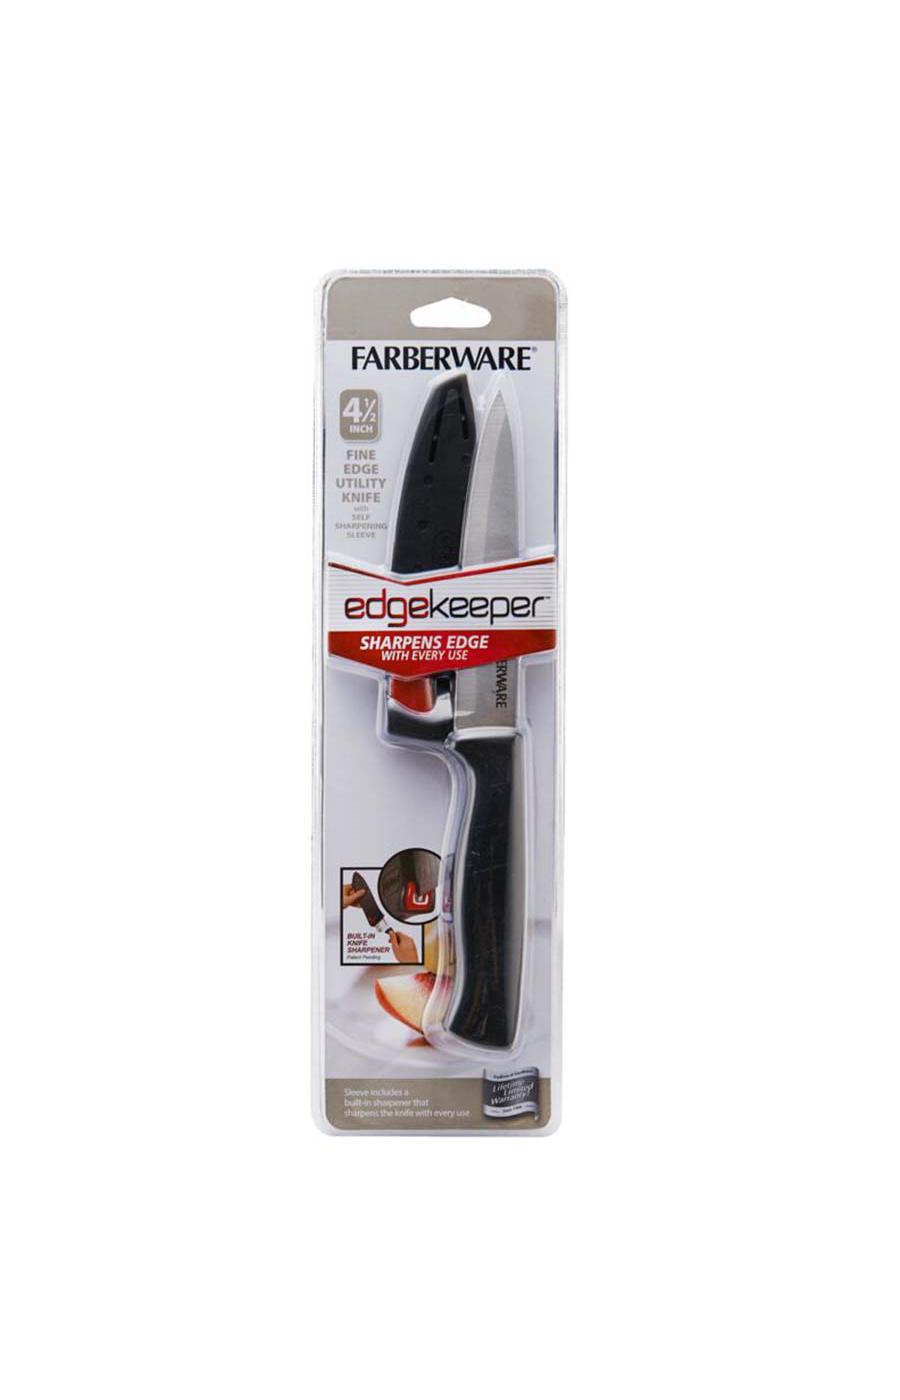 Farberware EdgeKeeper 6 inch Chef Knife with Self-Sharpening Sleeve NEW